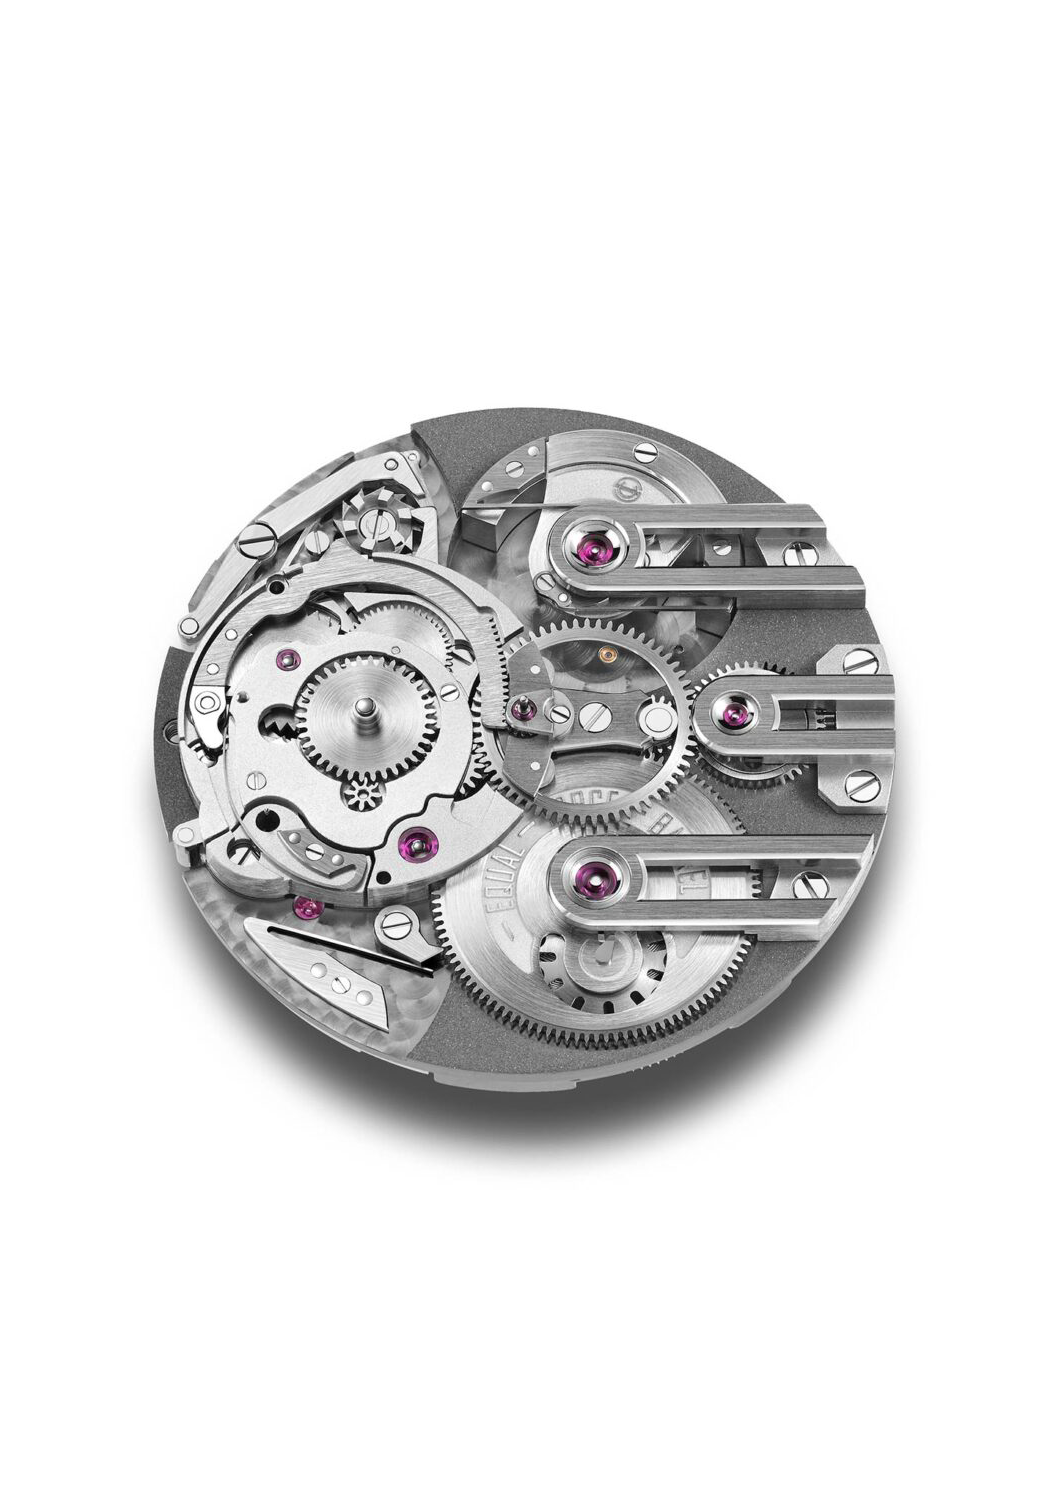 Armin Strom Orbit First Edition Calibre ASS20 | OsterJewelers.com